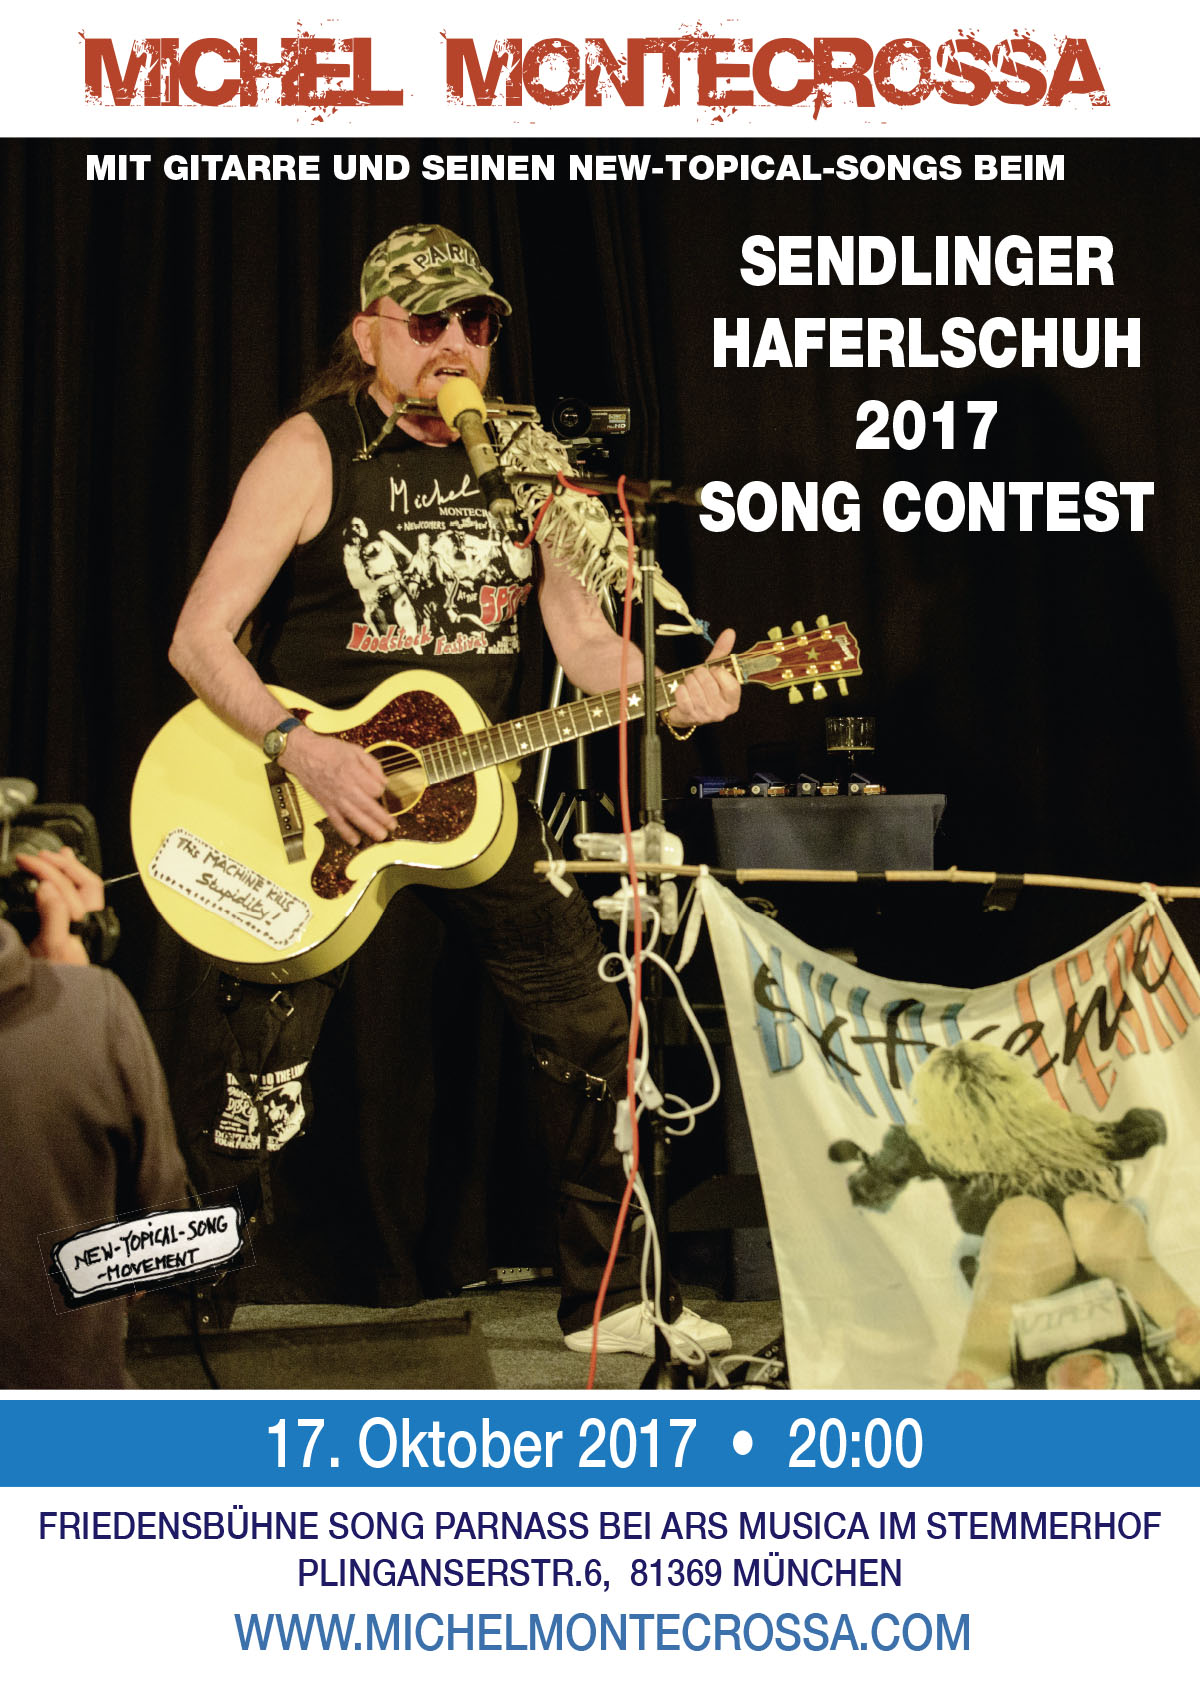 Sendlinger Haferlschuh 2017 Song Contest